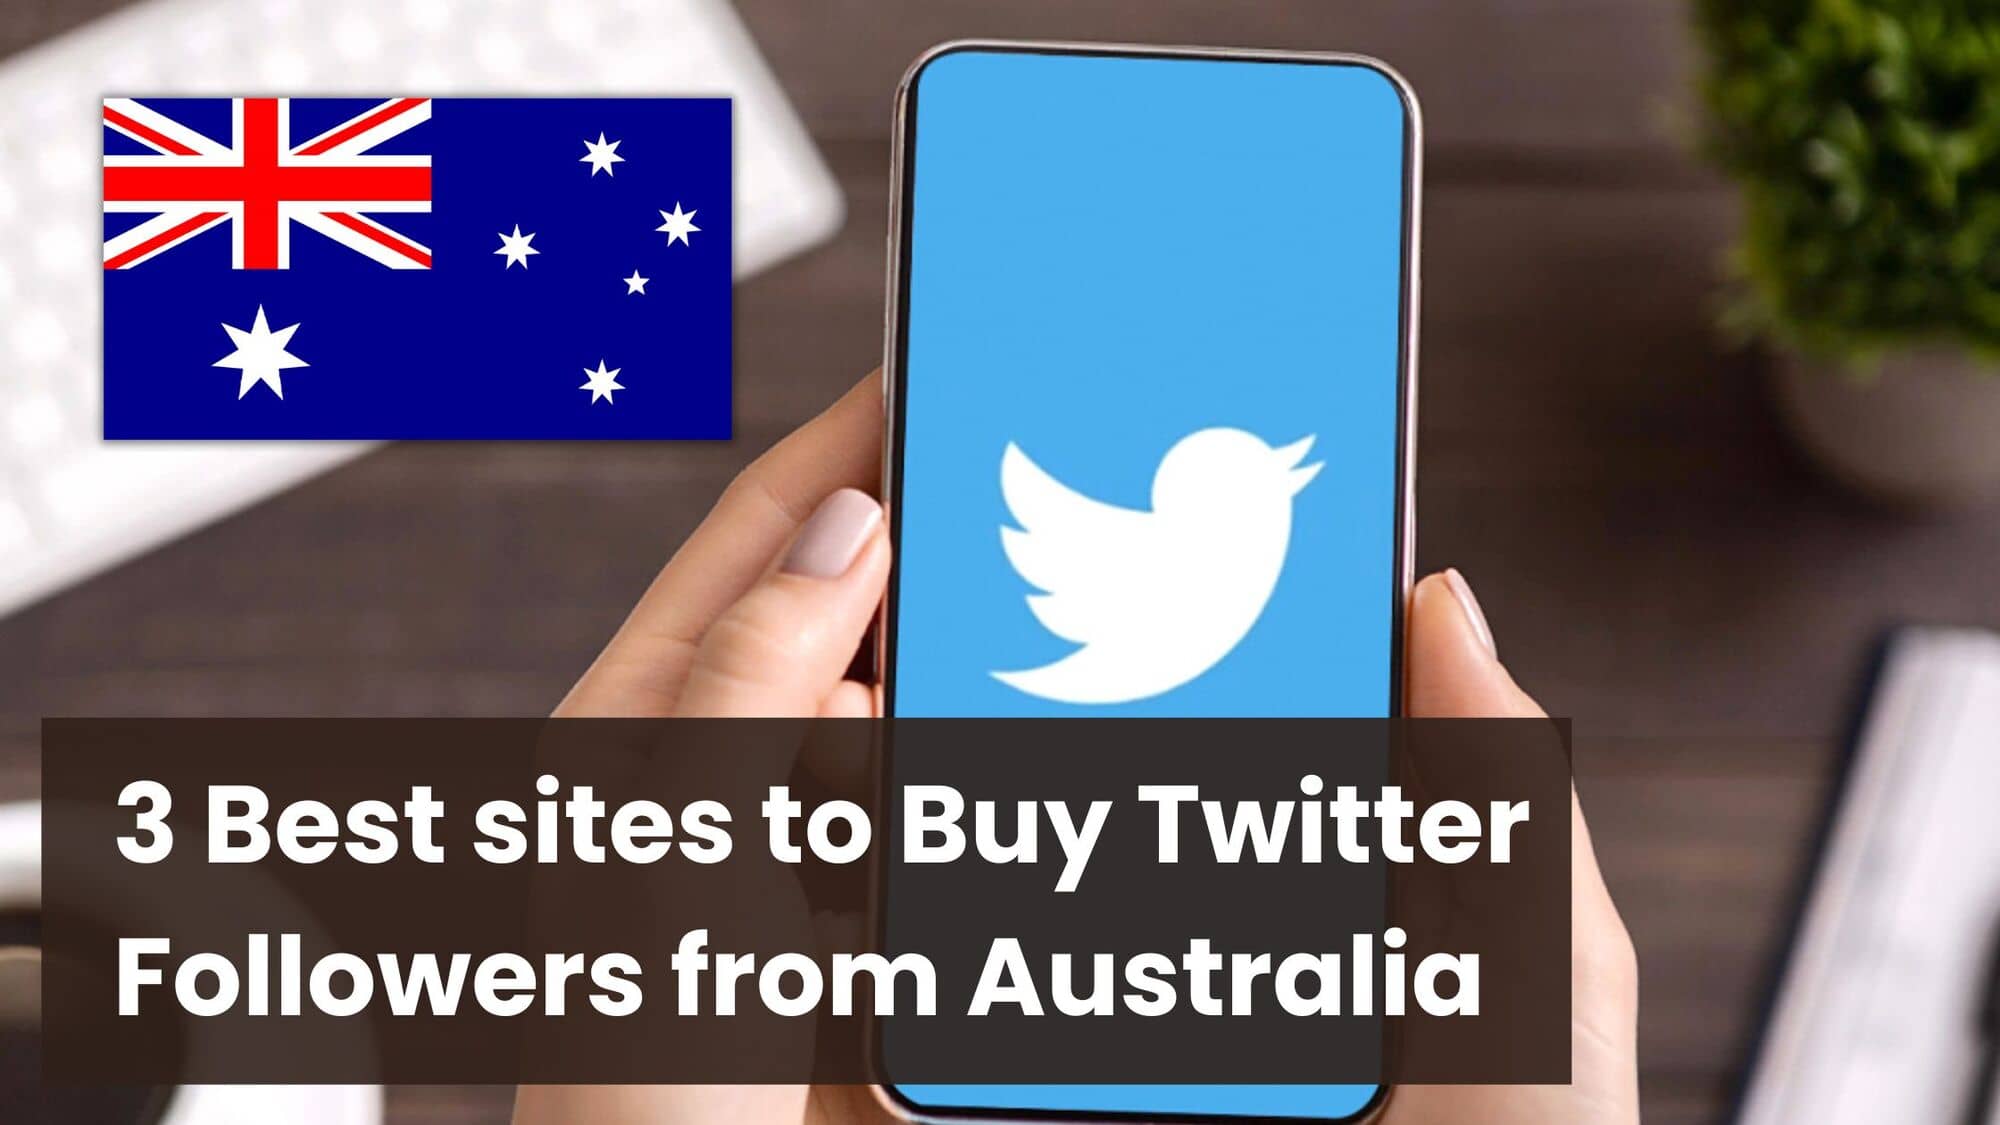 Best sites to Buy Twitter Followers Australia